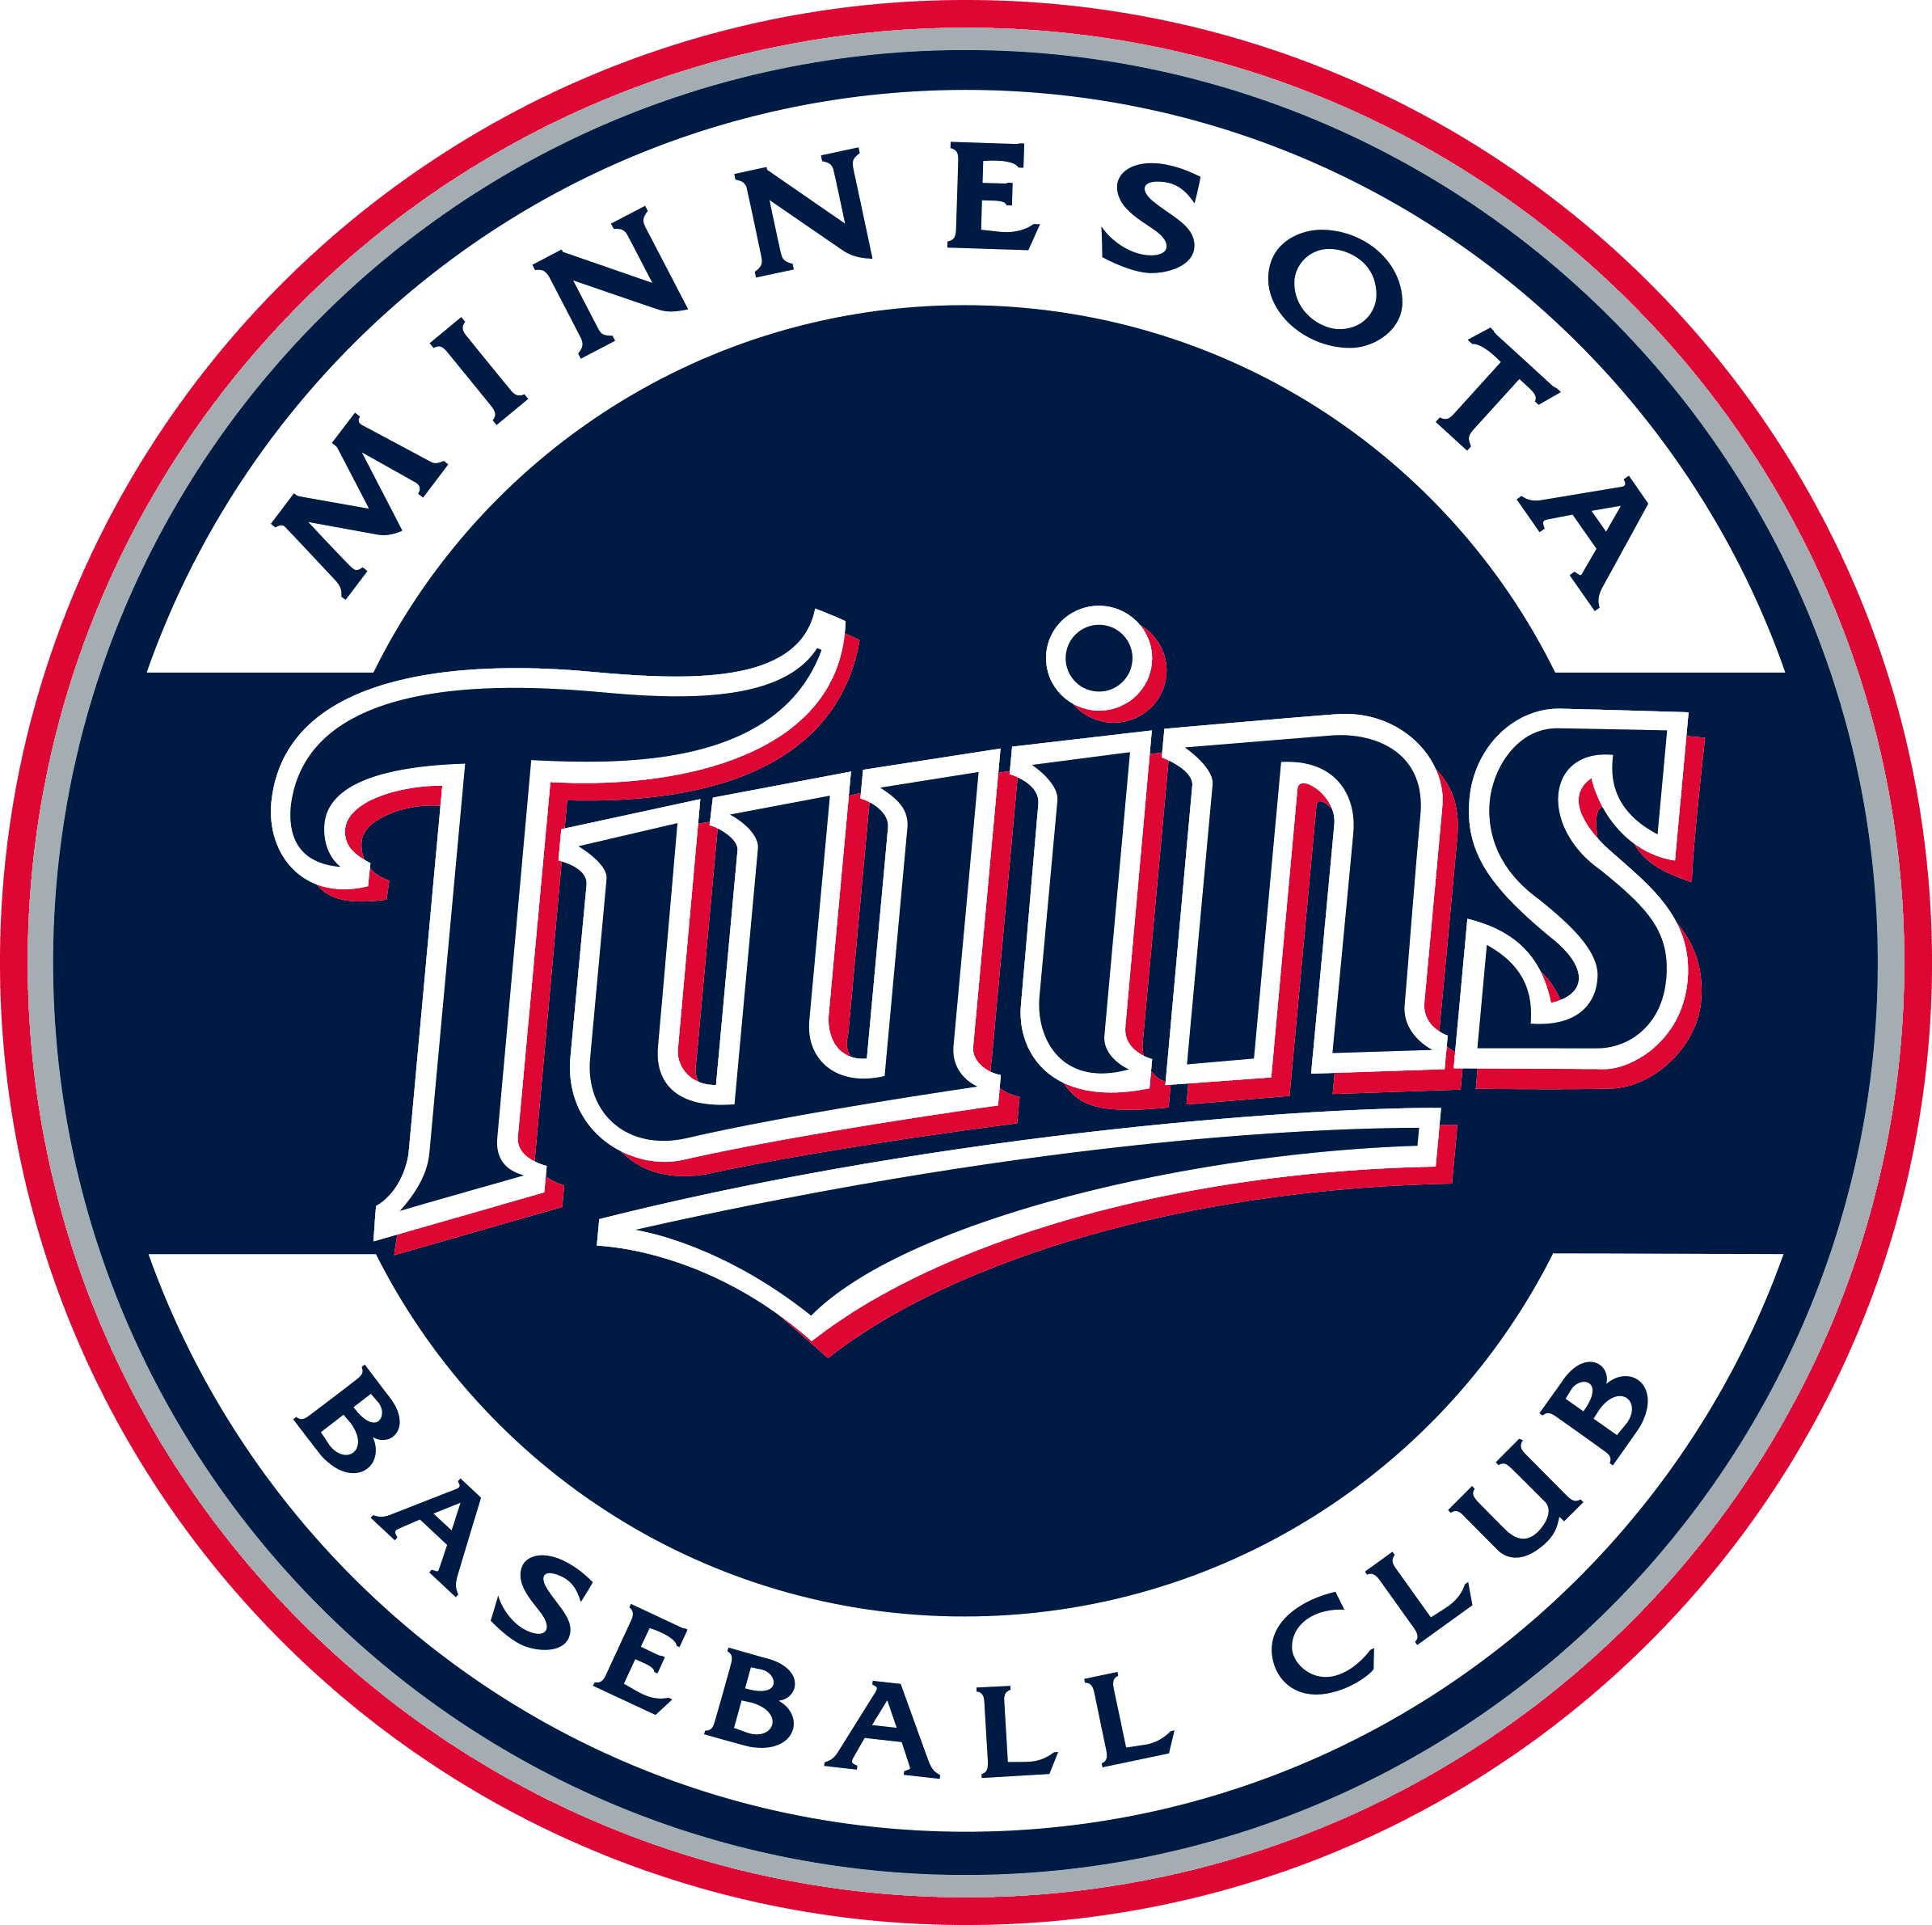 Officially Licensed MLB Team Logo House Flag - Minnesota Twins